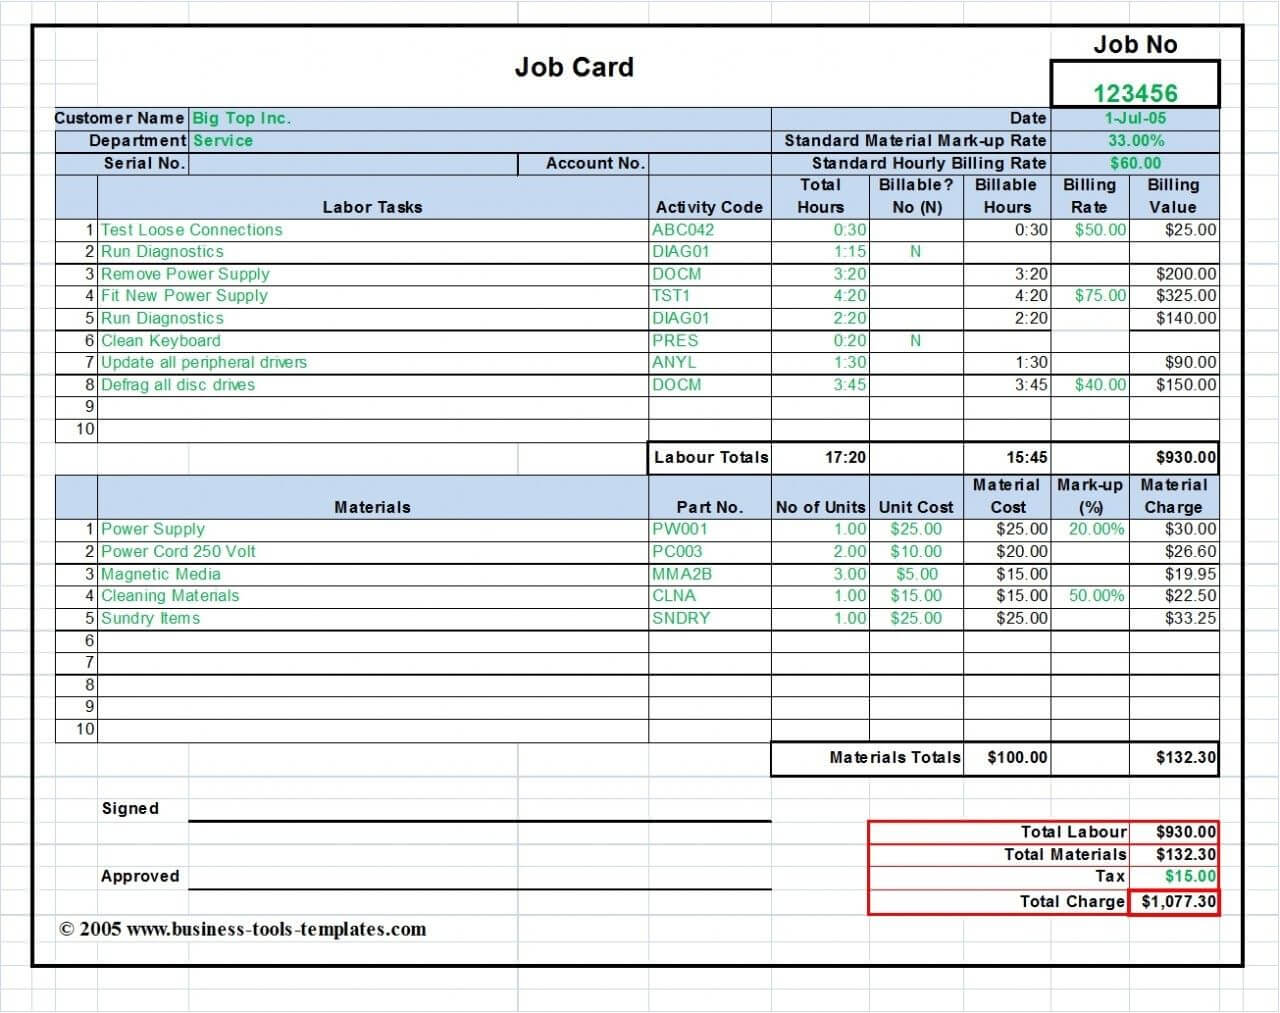 Workshop Job Card, Labor & Material Cost Estimator For Service Job Card Template